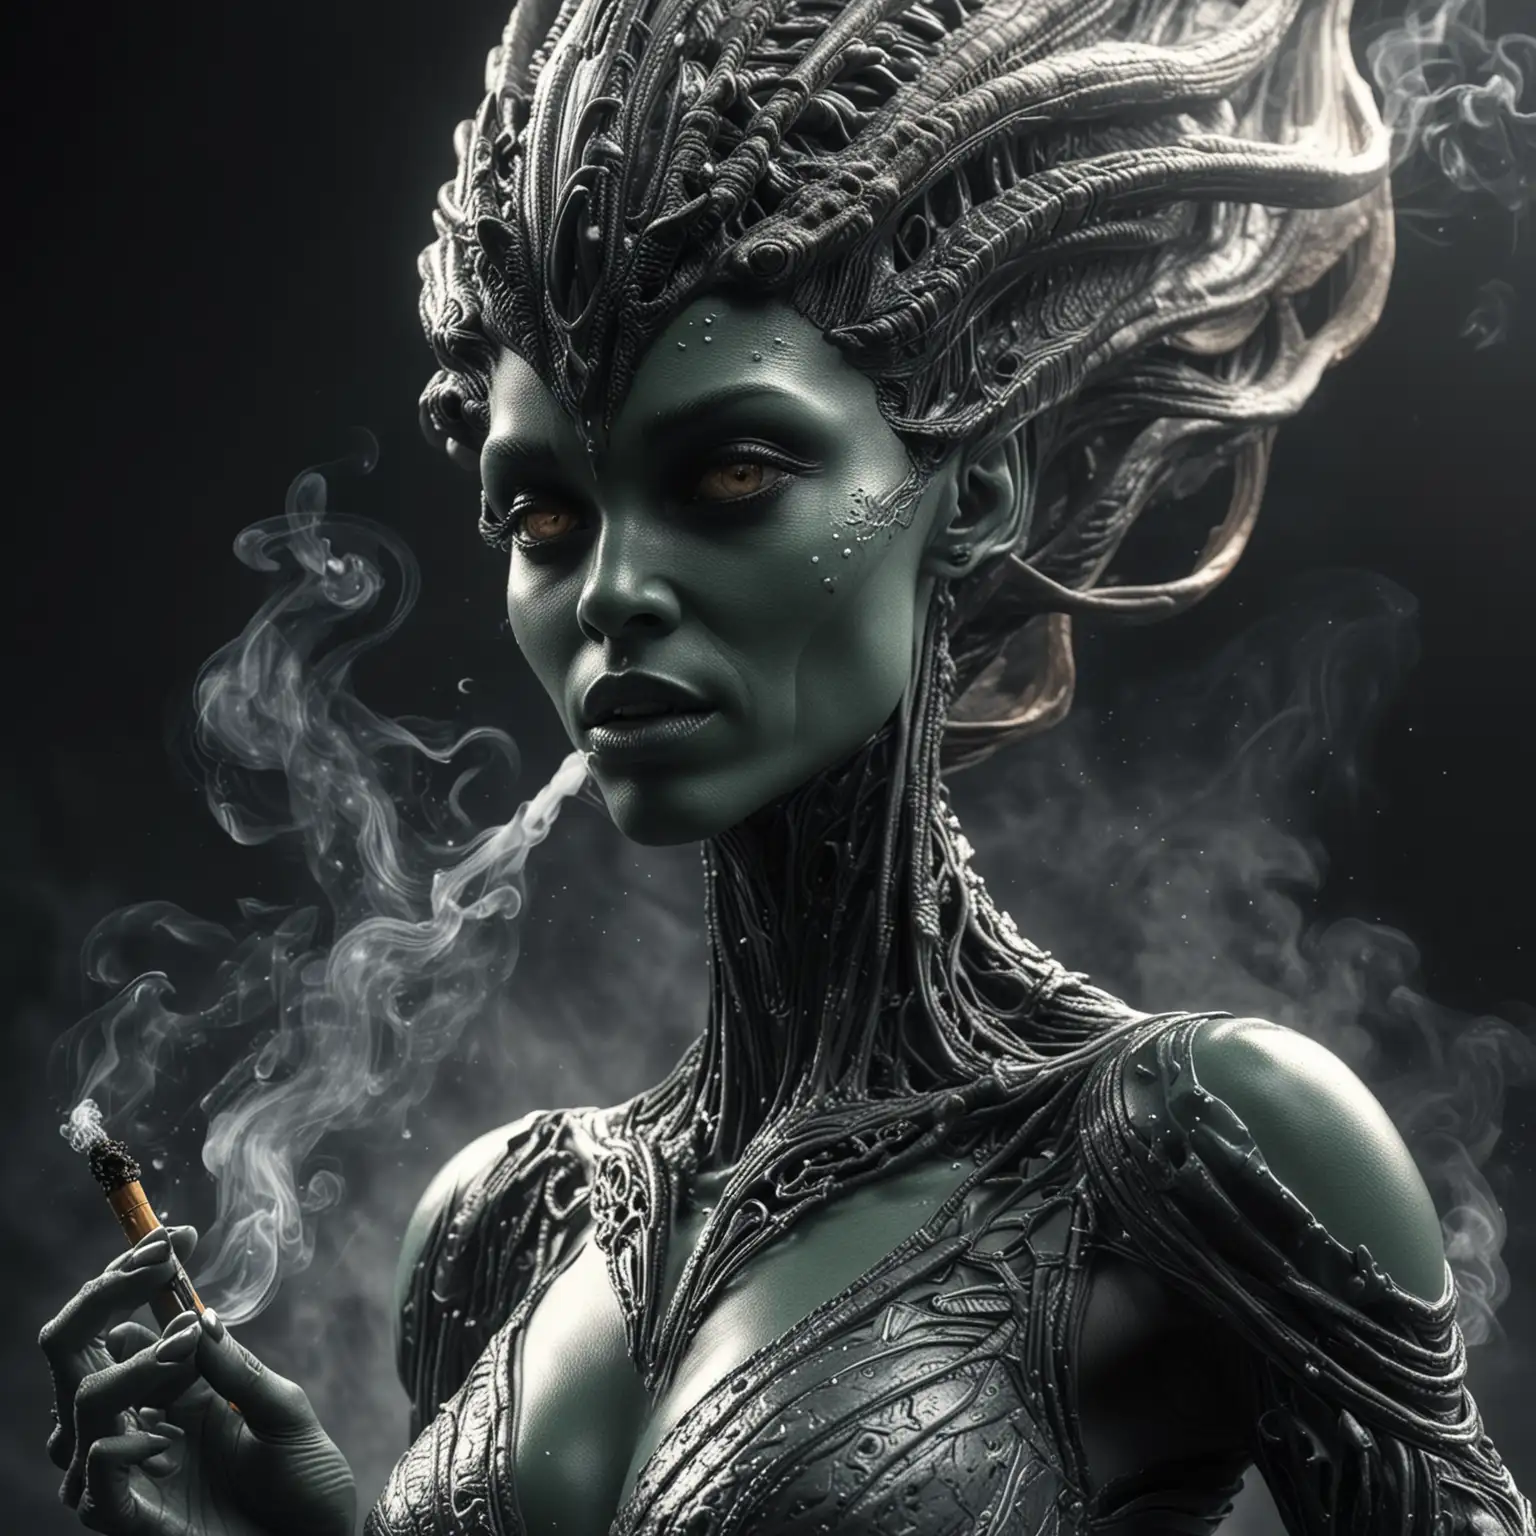 Seductive Alien Goddess Exudes Passion in Enigmatic Smoke